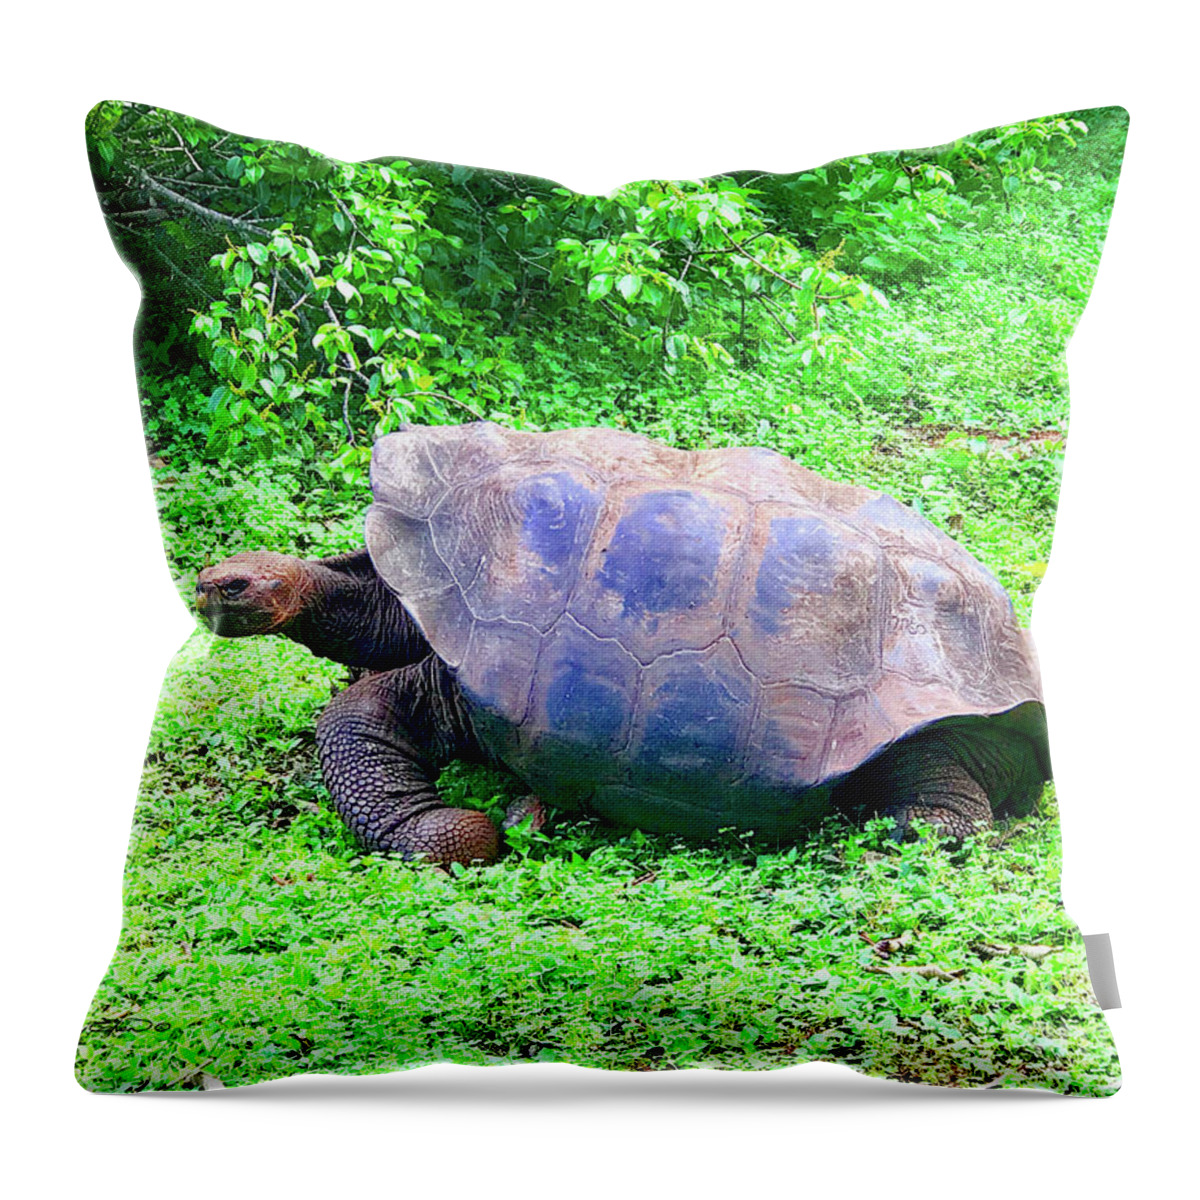 Galapagos Throw Pillow featuring the photograph Galapagos Tortuga by Carey Chen